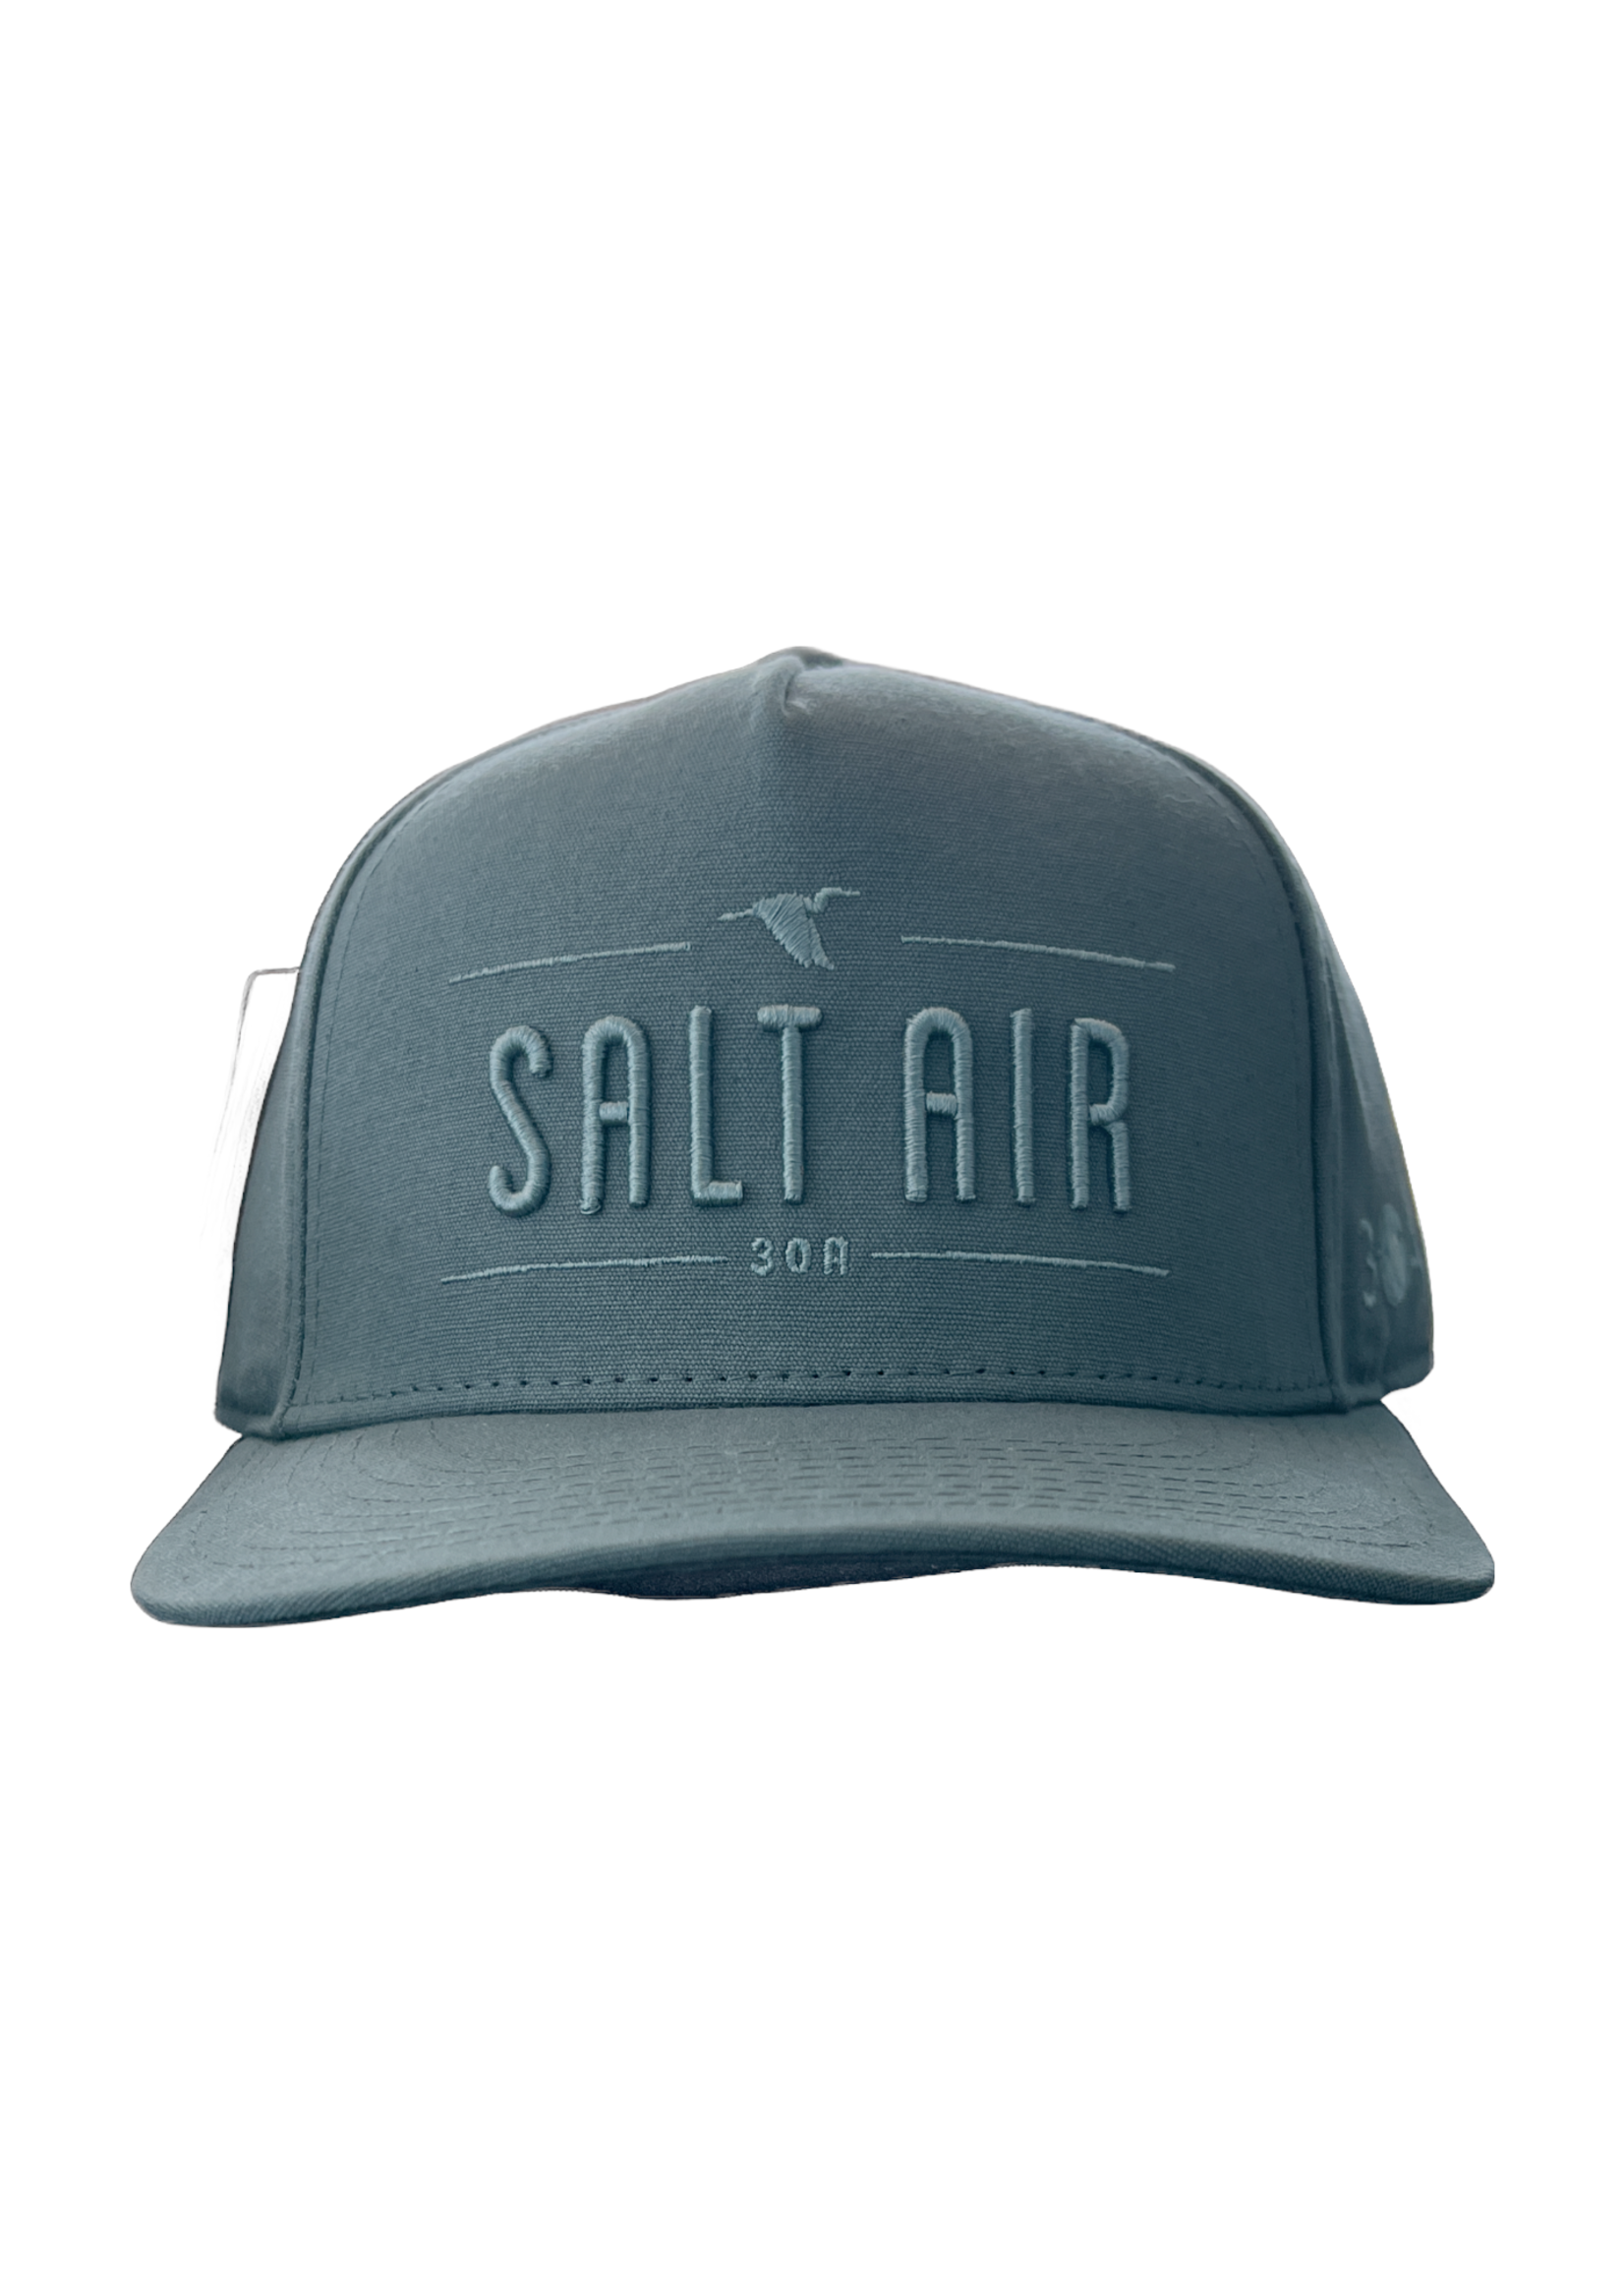 Team Salty Monochrome Salt Air Hat